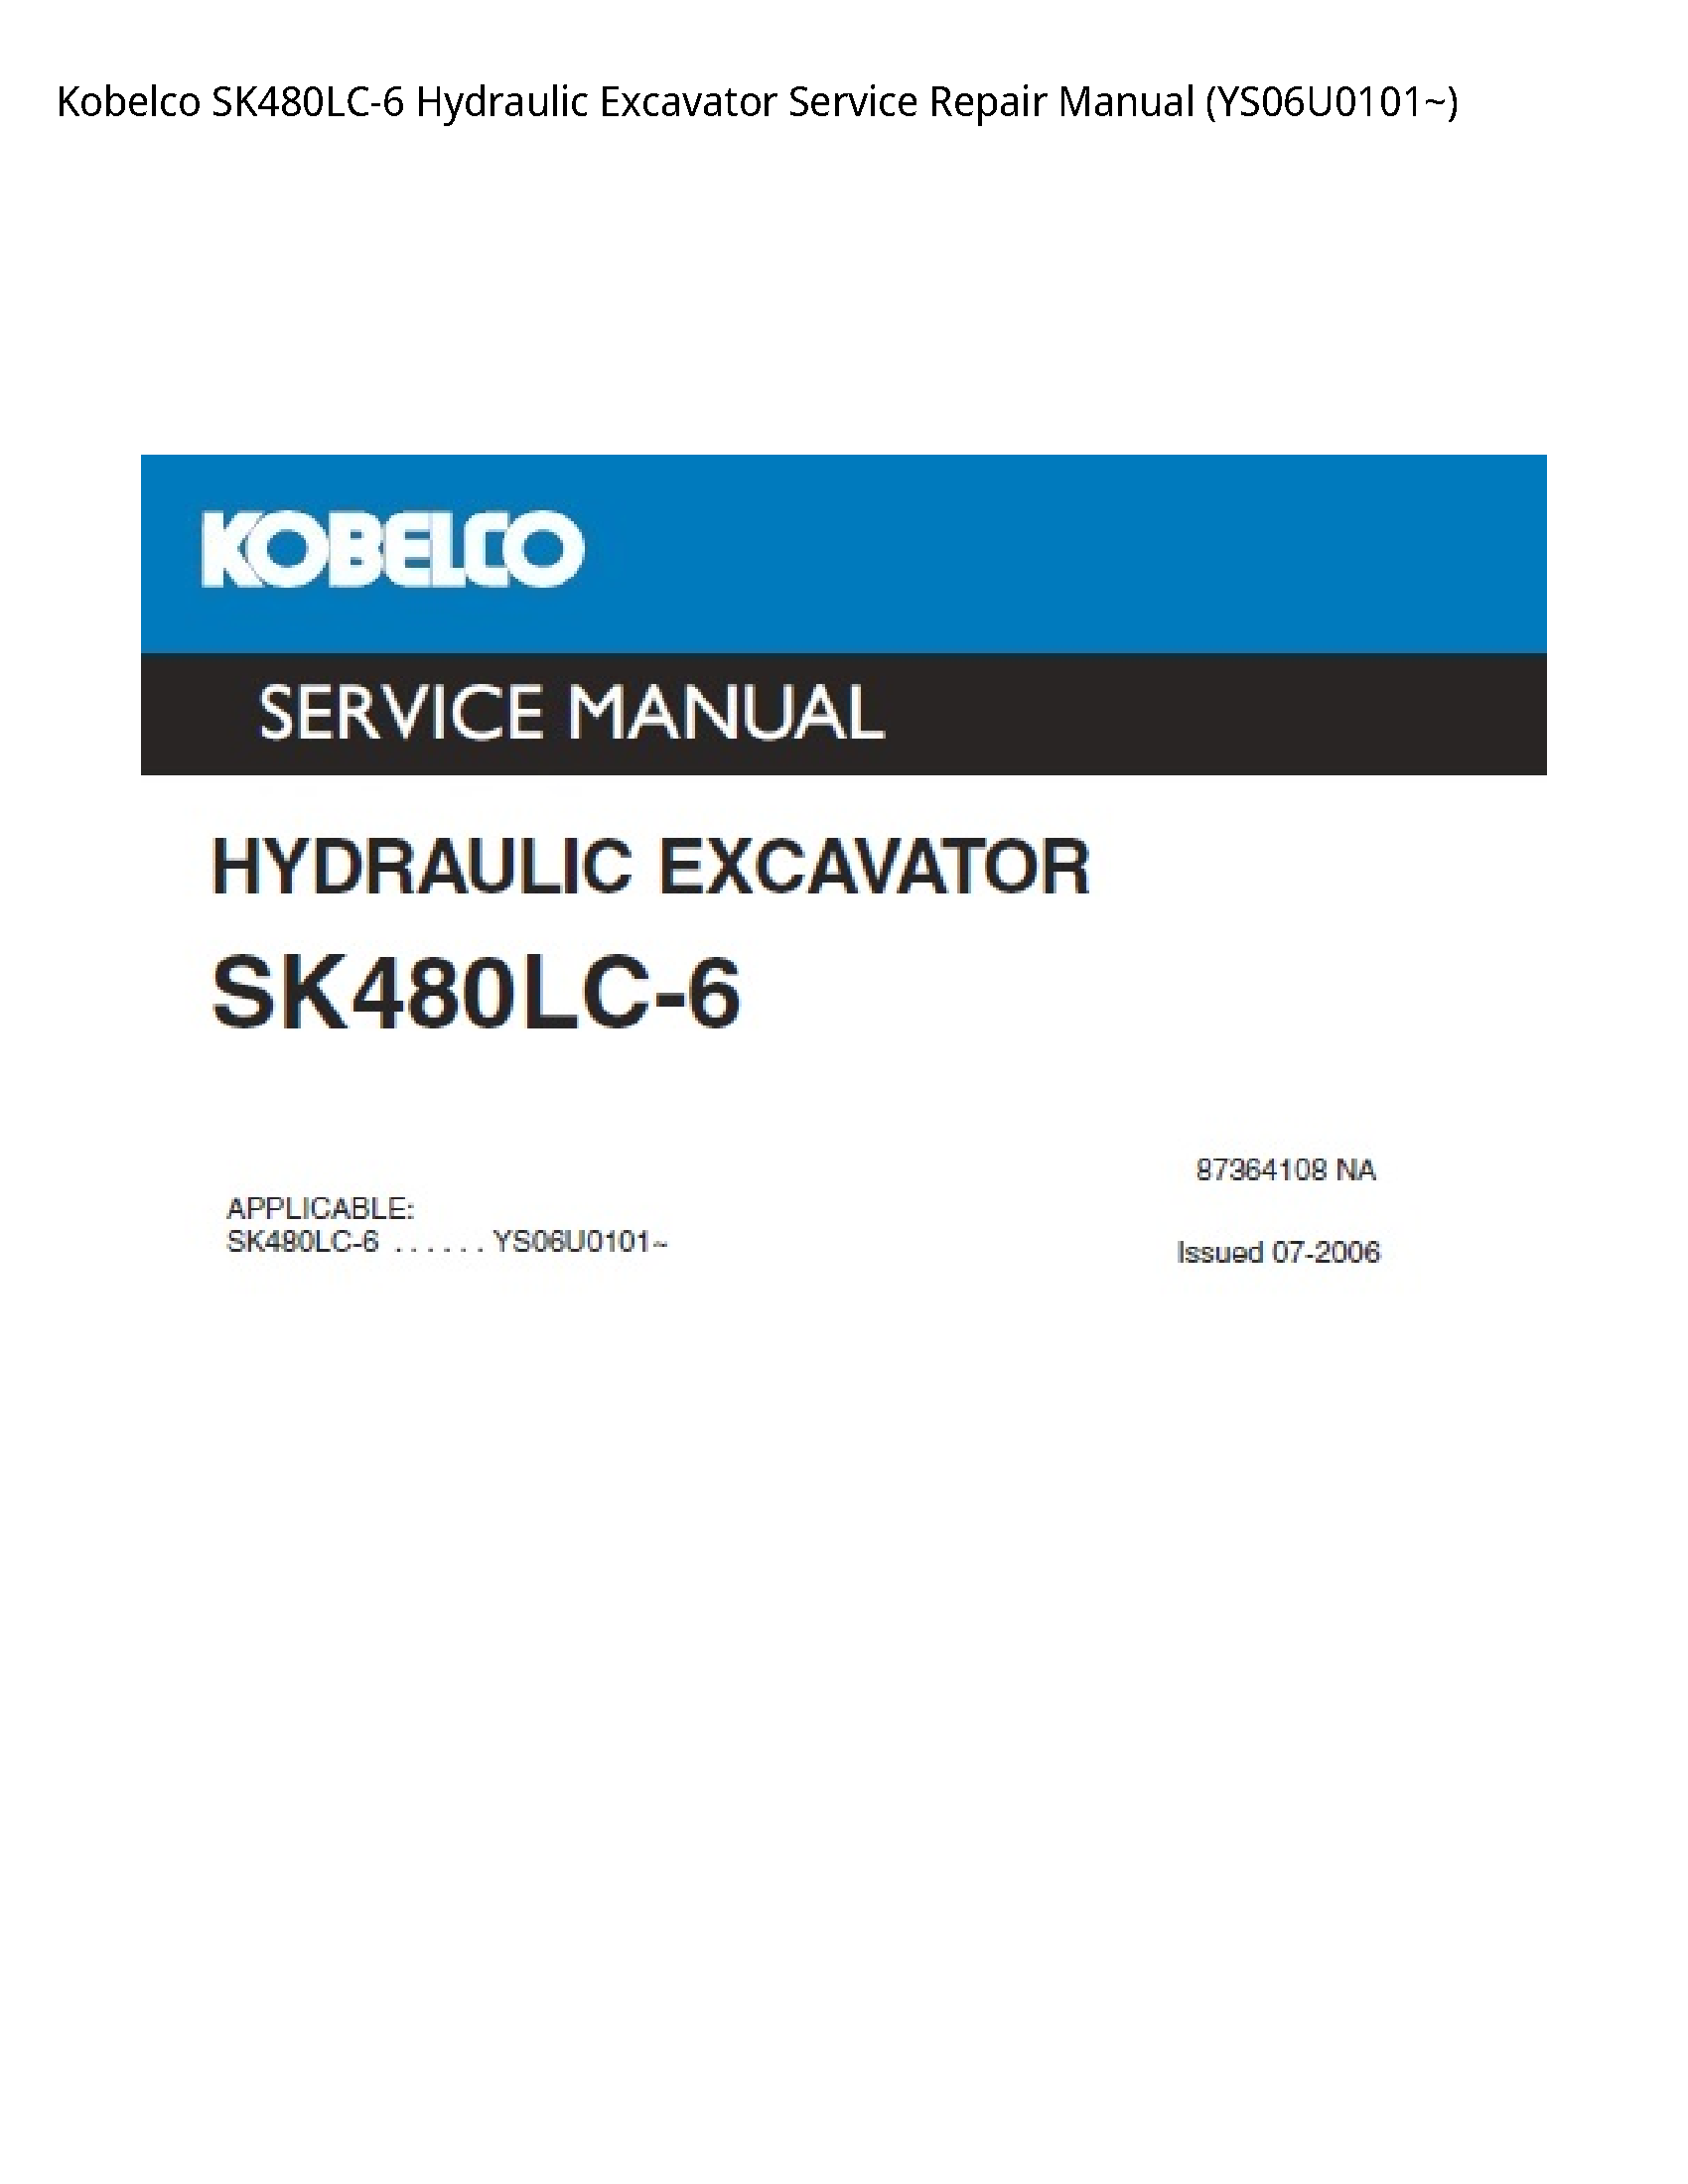 Kobelco SK480LC-6 Hydraulic Excavator manual